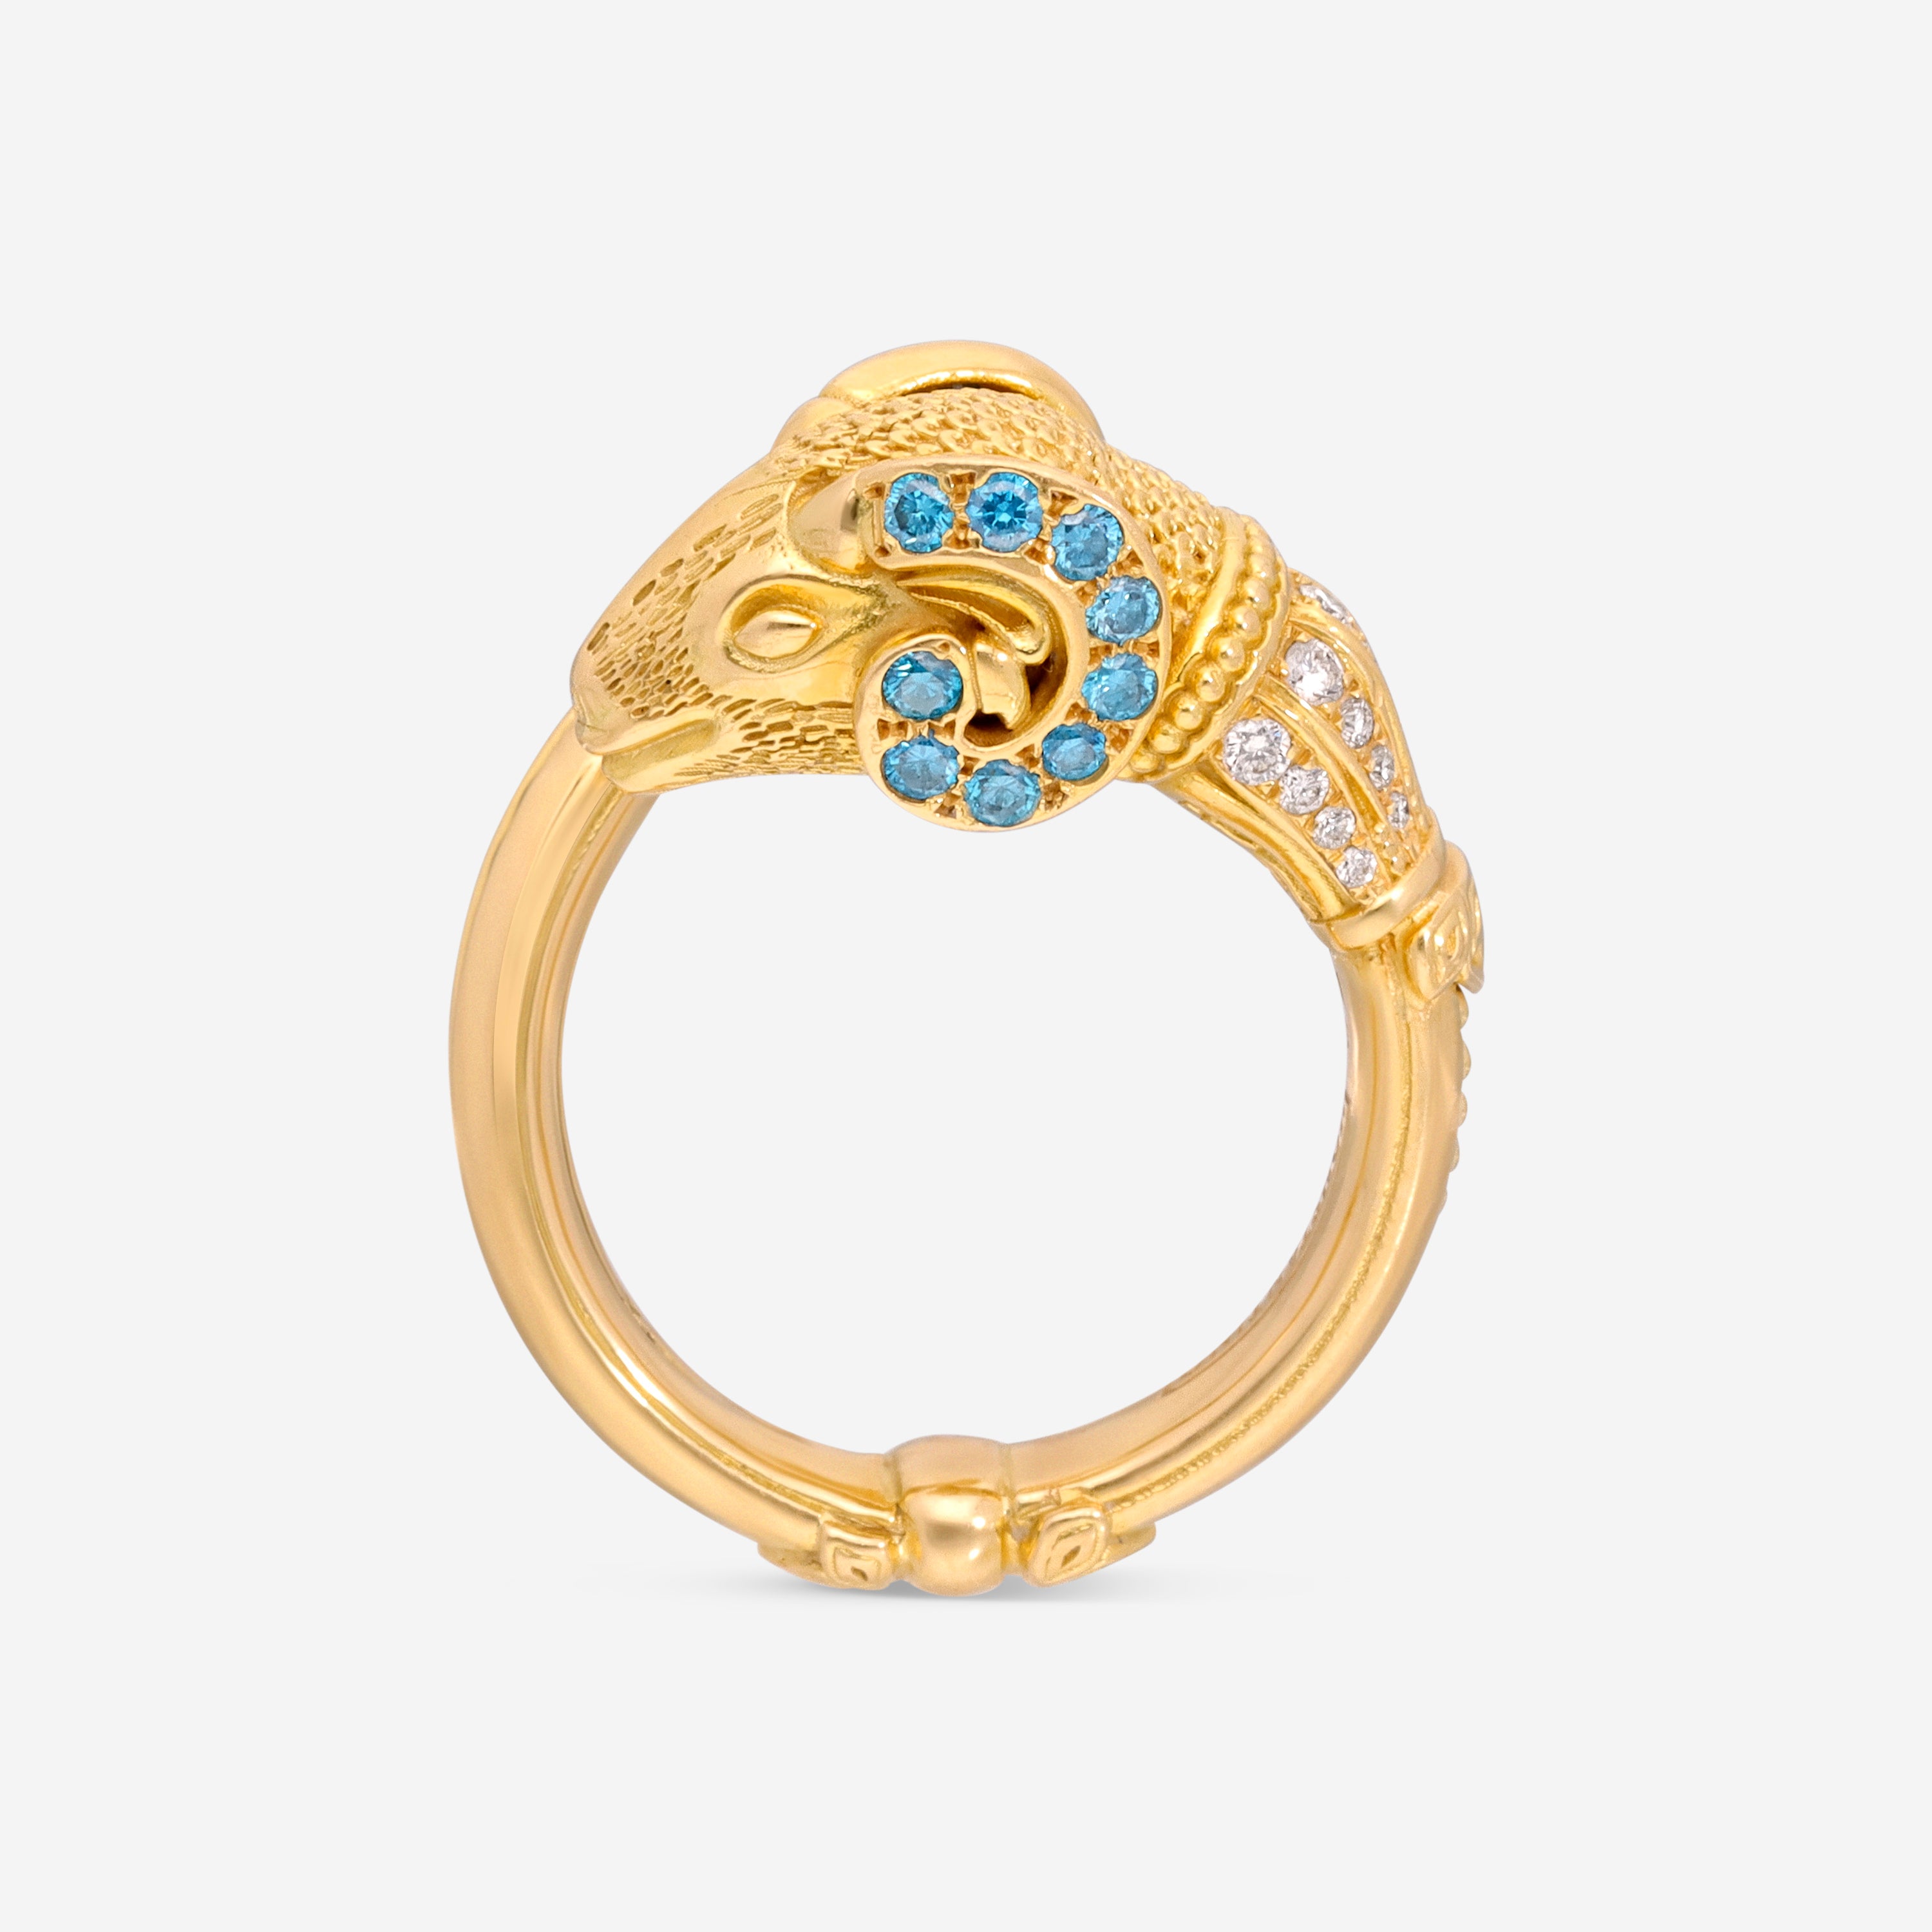 Konstantino Melissa 18K Yellow Gold, Blue and White Diamond Ring DMK01113-18KT-413